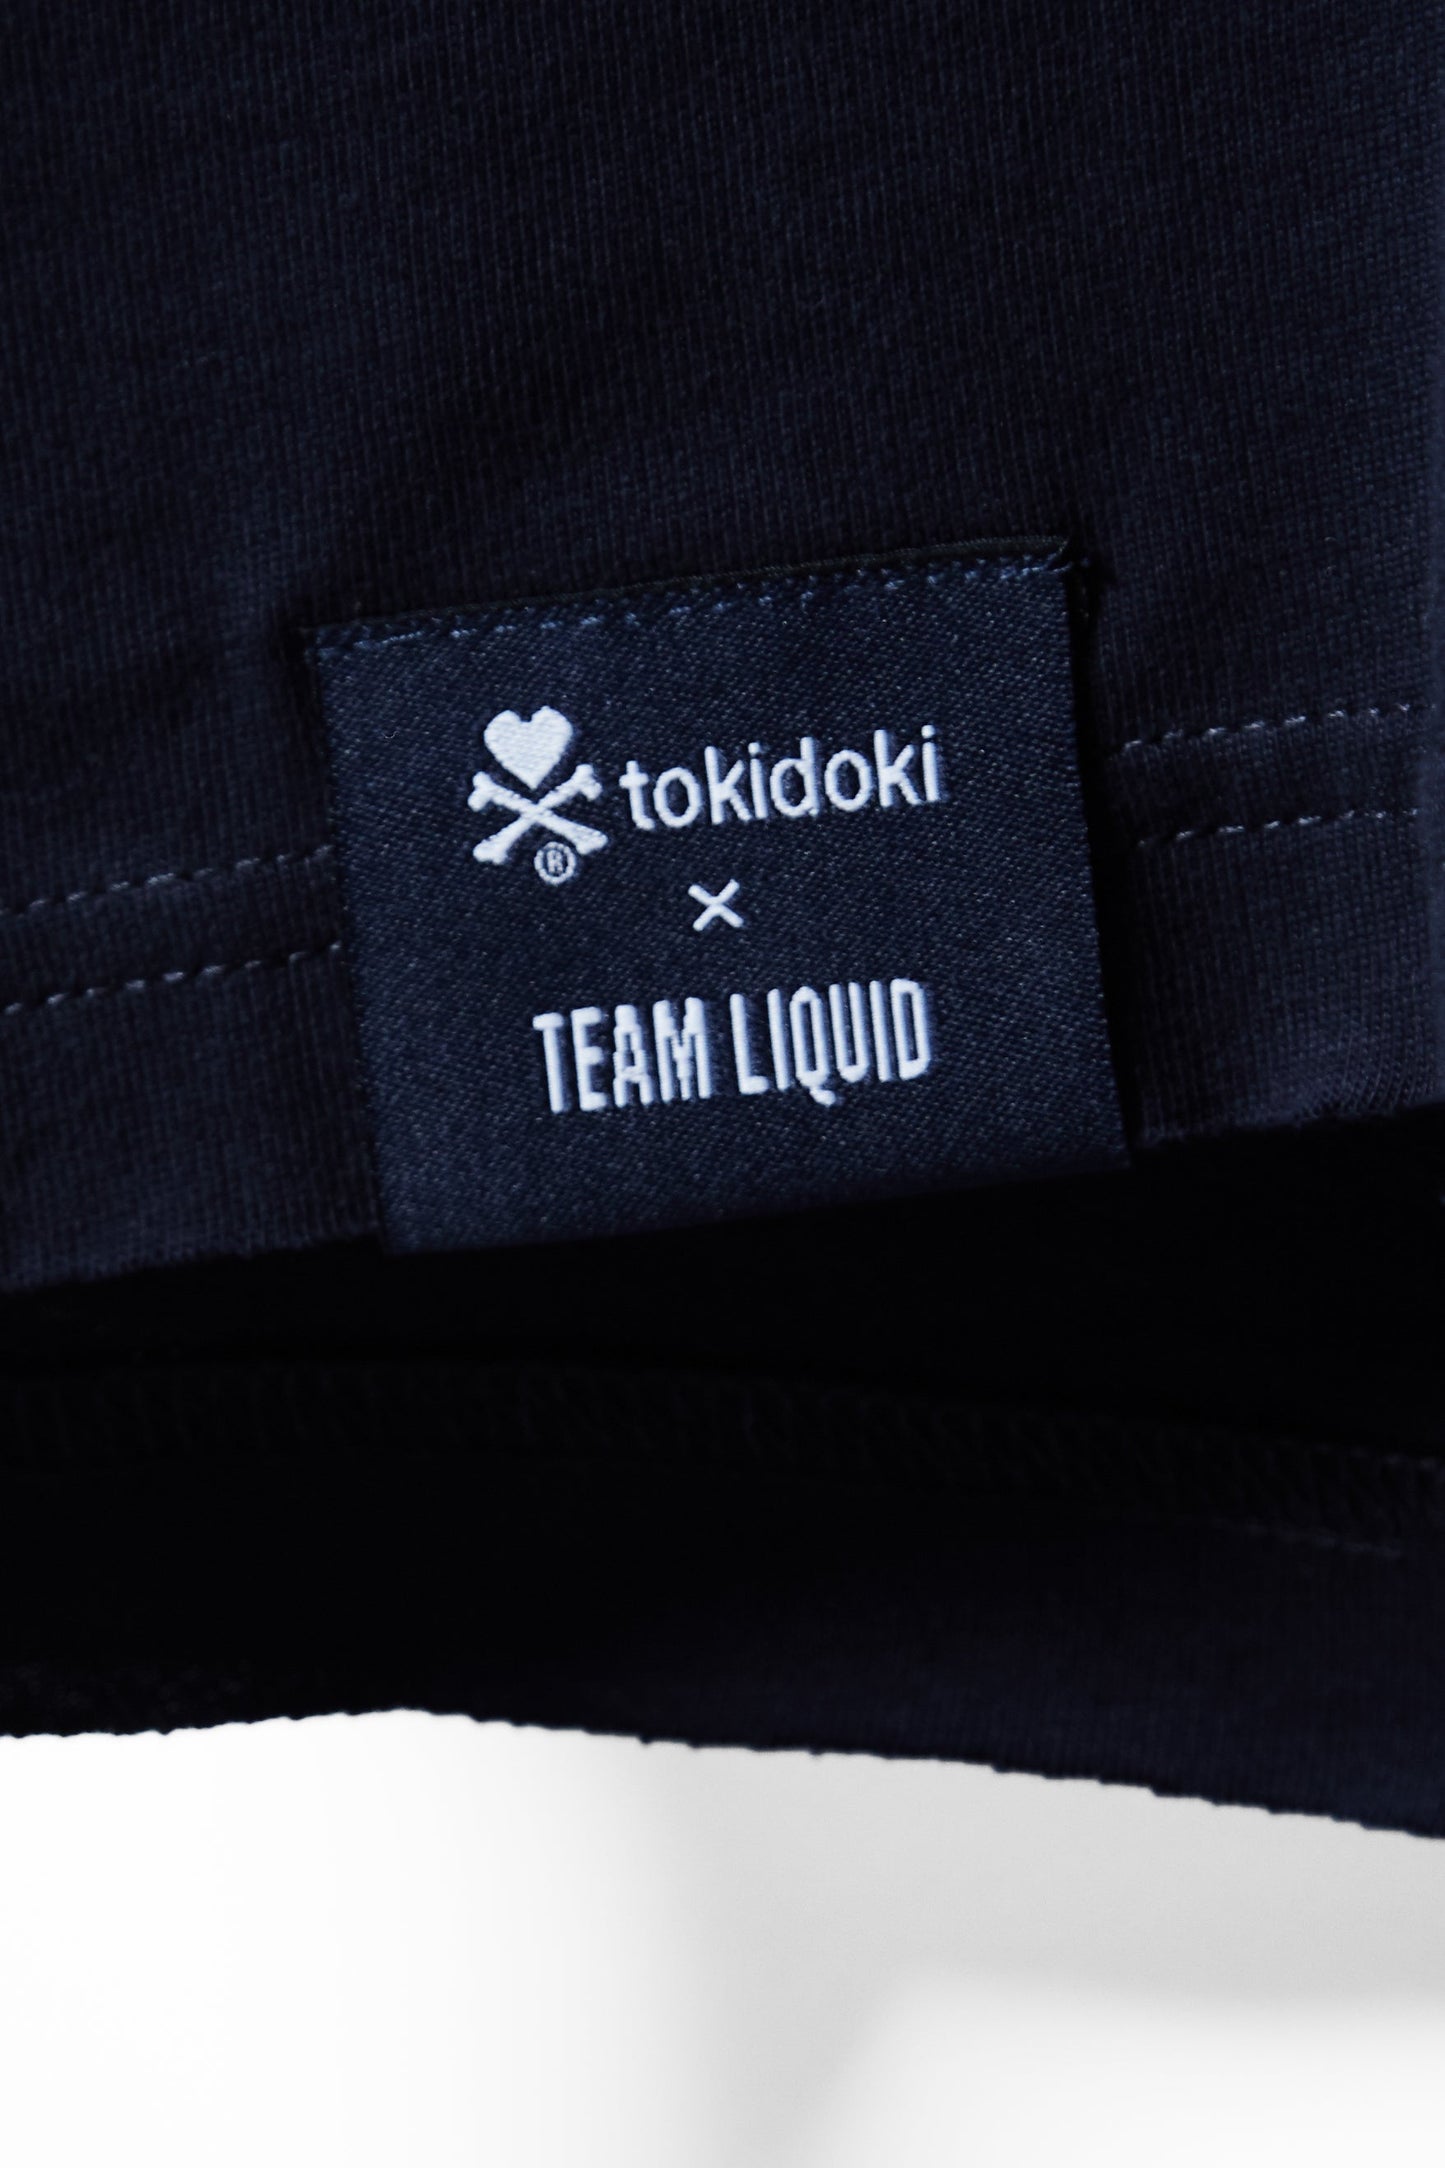 TOKIDOKI x LIQUID CREST LONG SLEEVE TEE - NAVY - Team Liquid